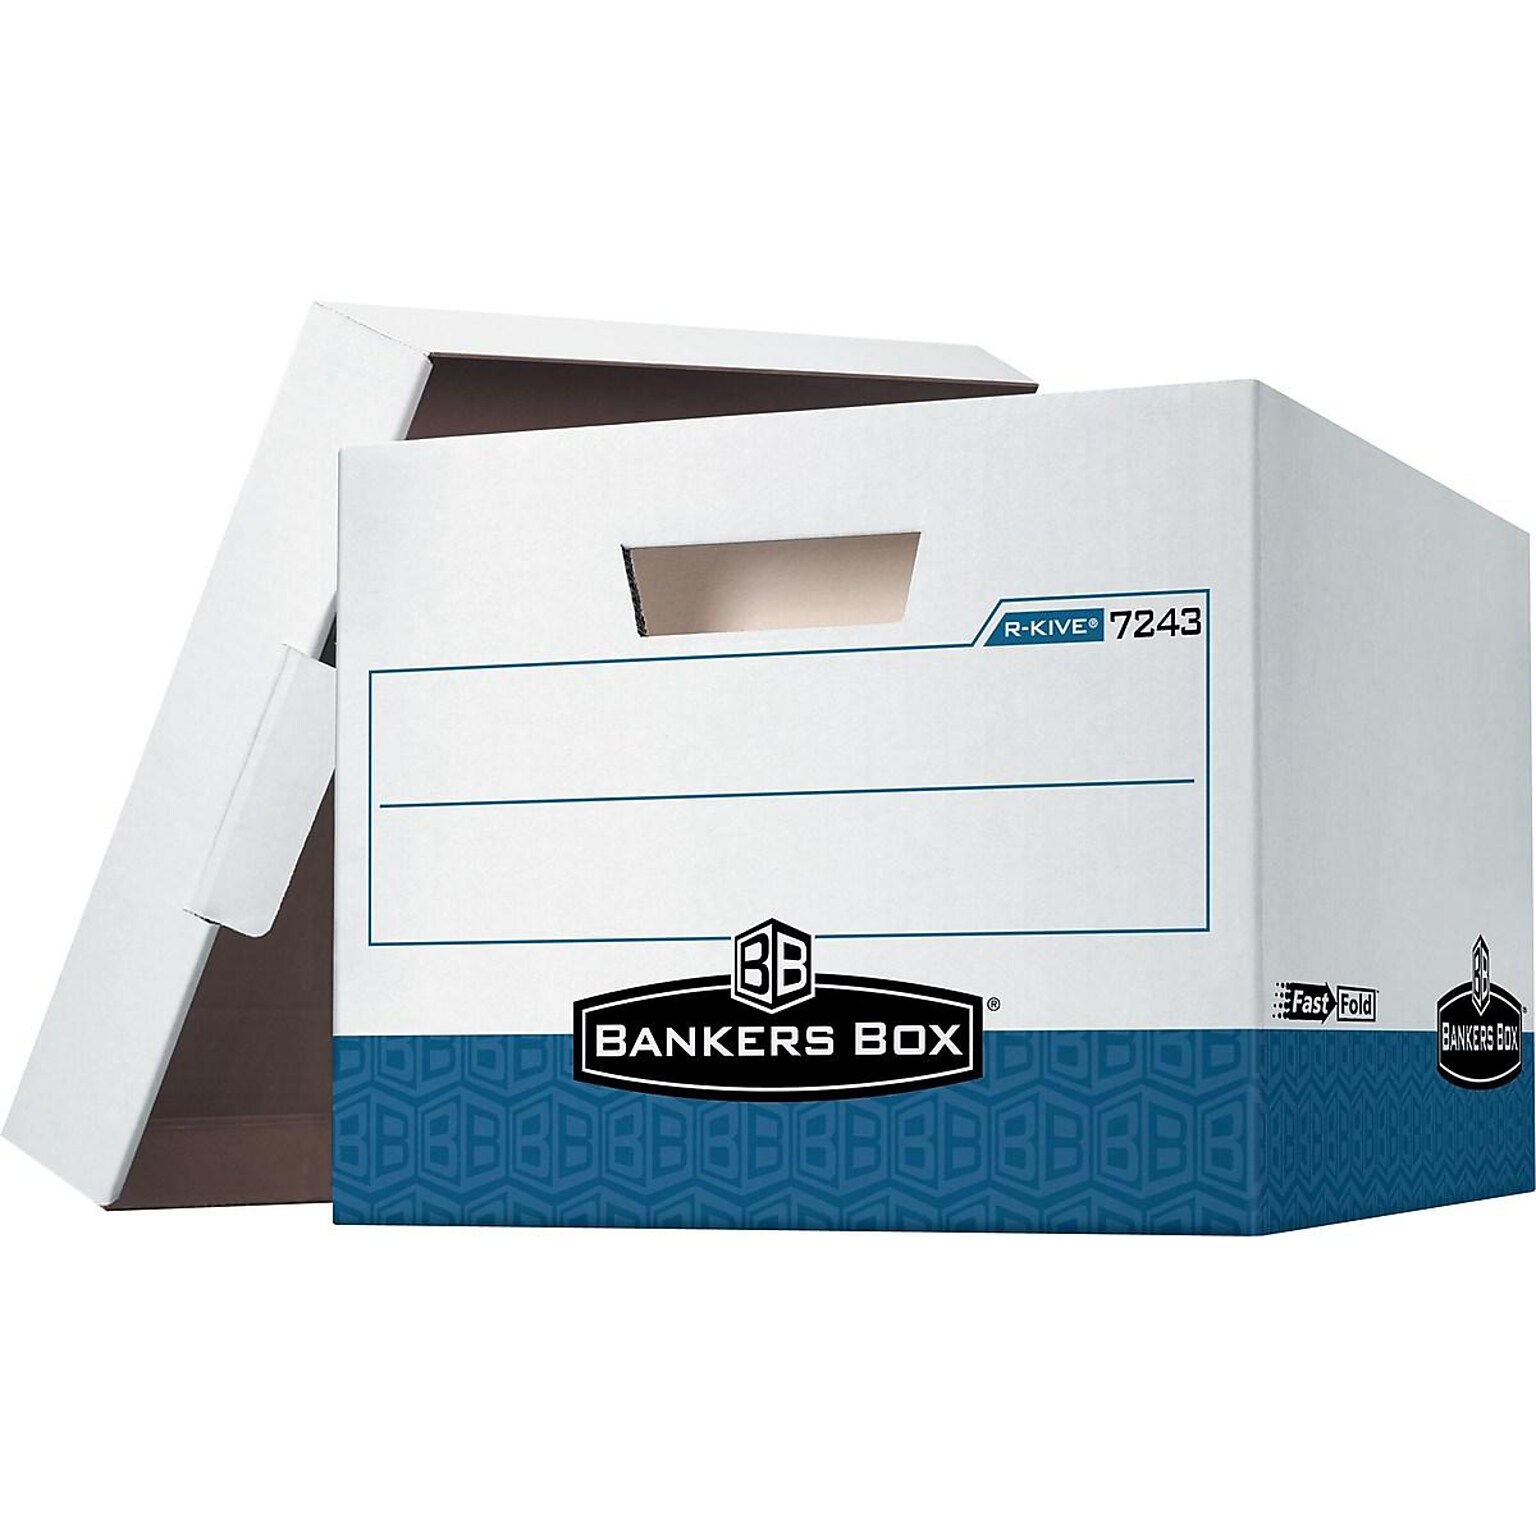 Bankers Box R-Kive® Heavy-Duty FastFold File Storage Boxes, Lift-Off Lid, Letter/Legal Size, White/Blue, 4/Carton (0724303)